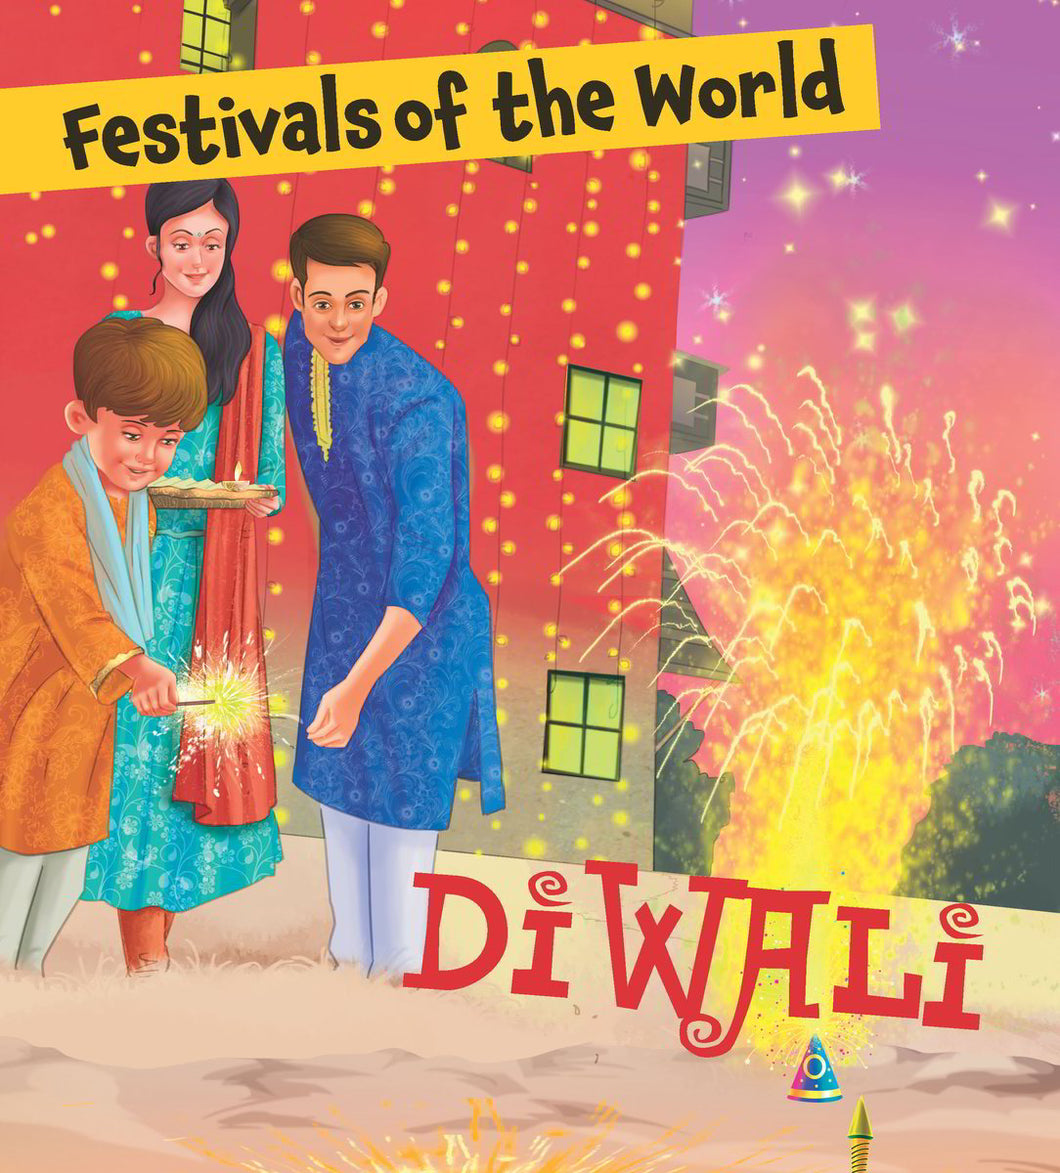 Festivals of the World: Diwali